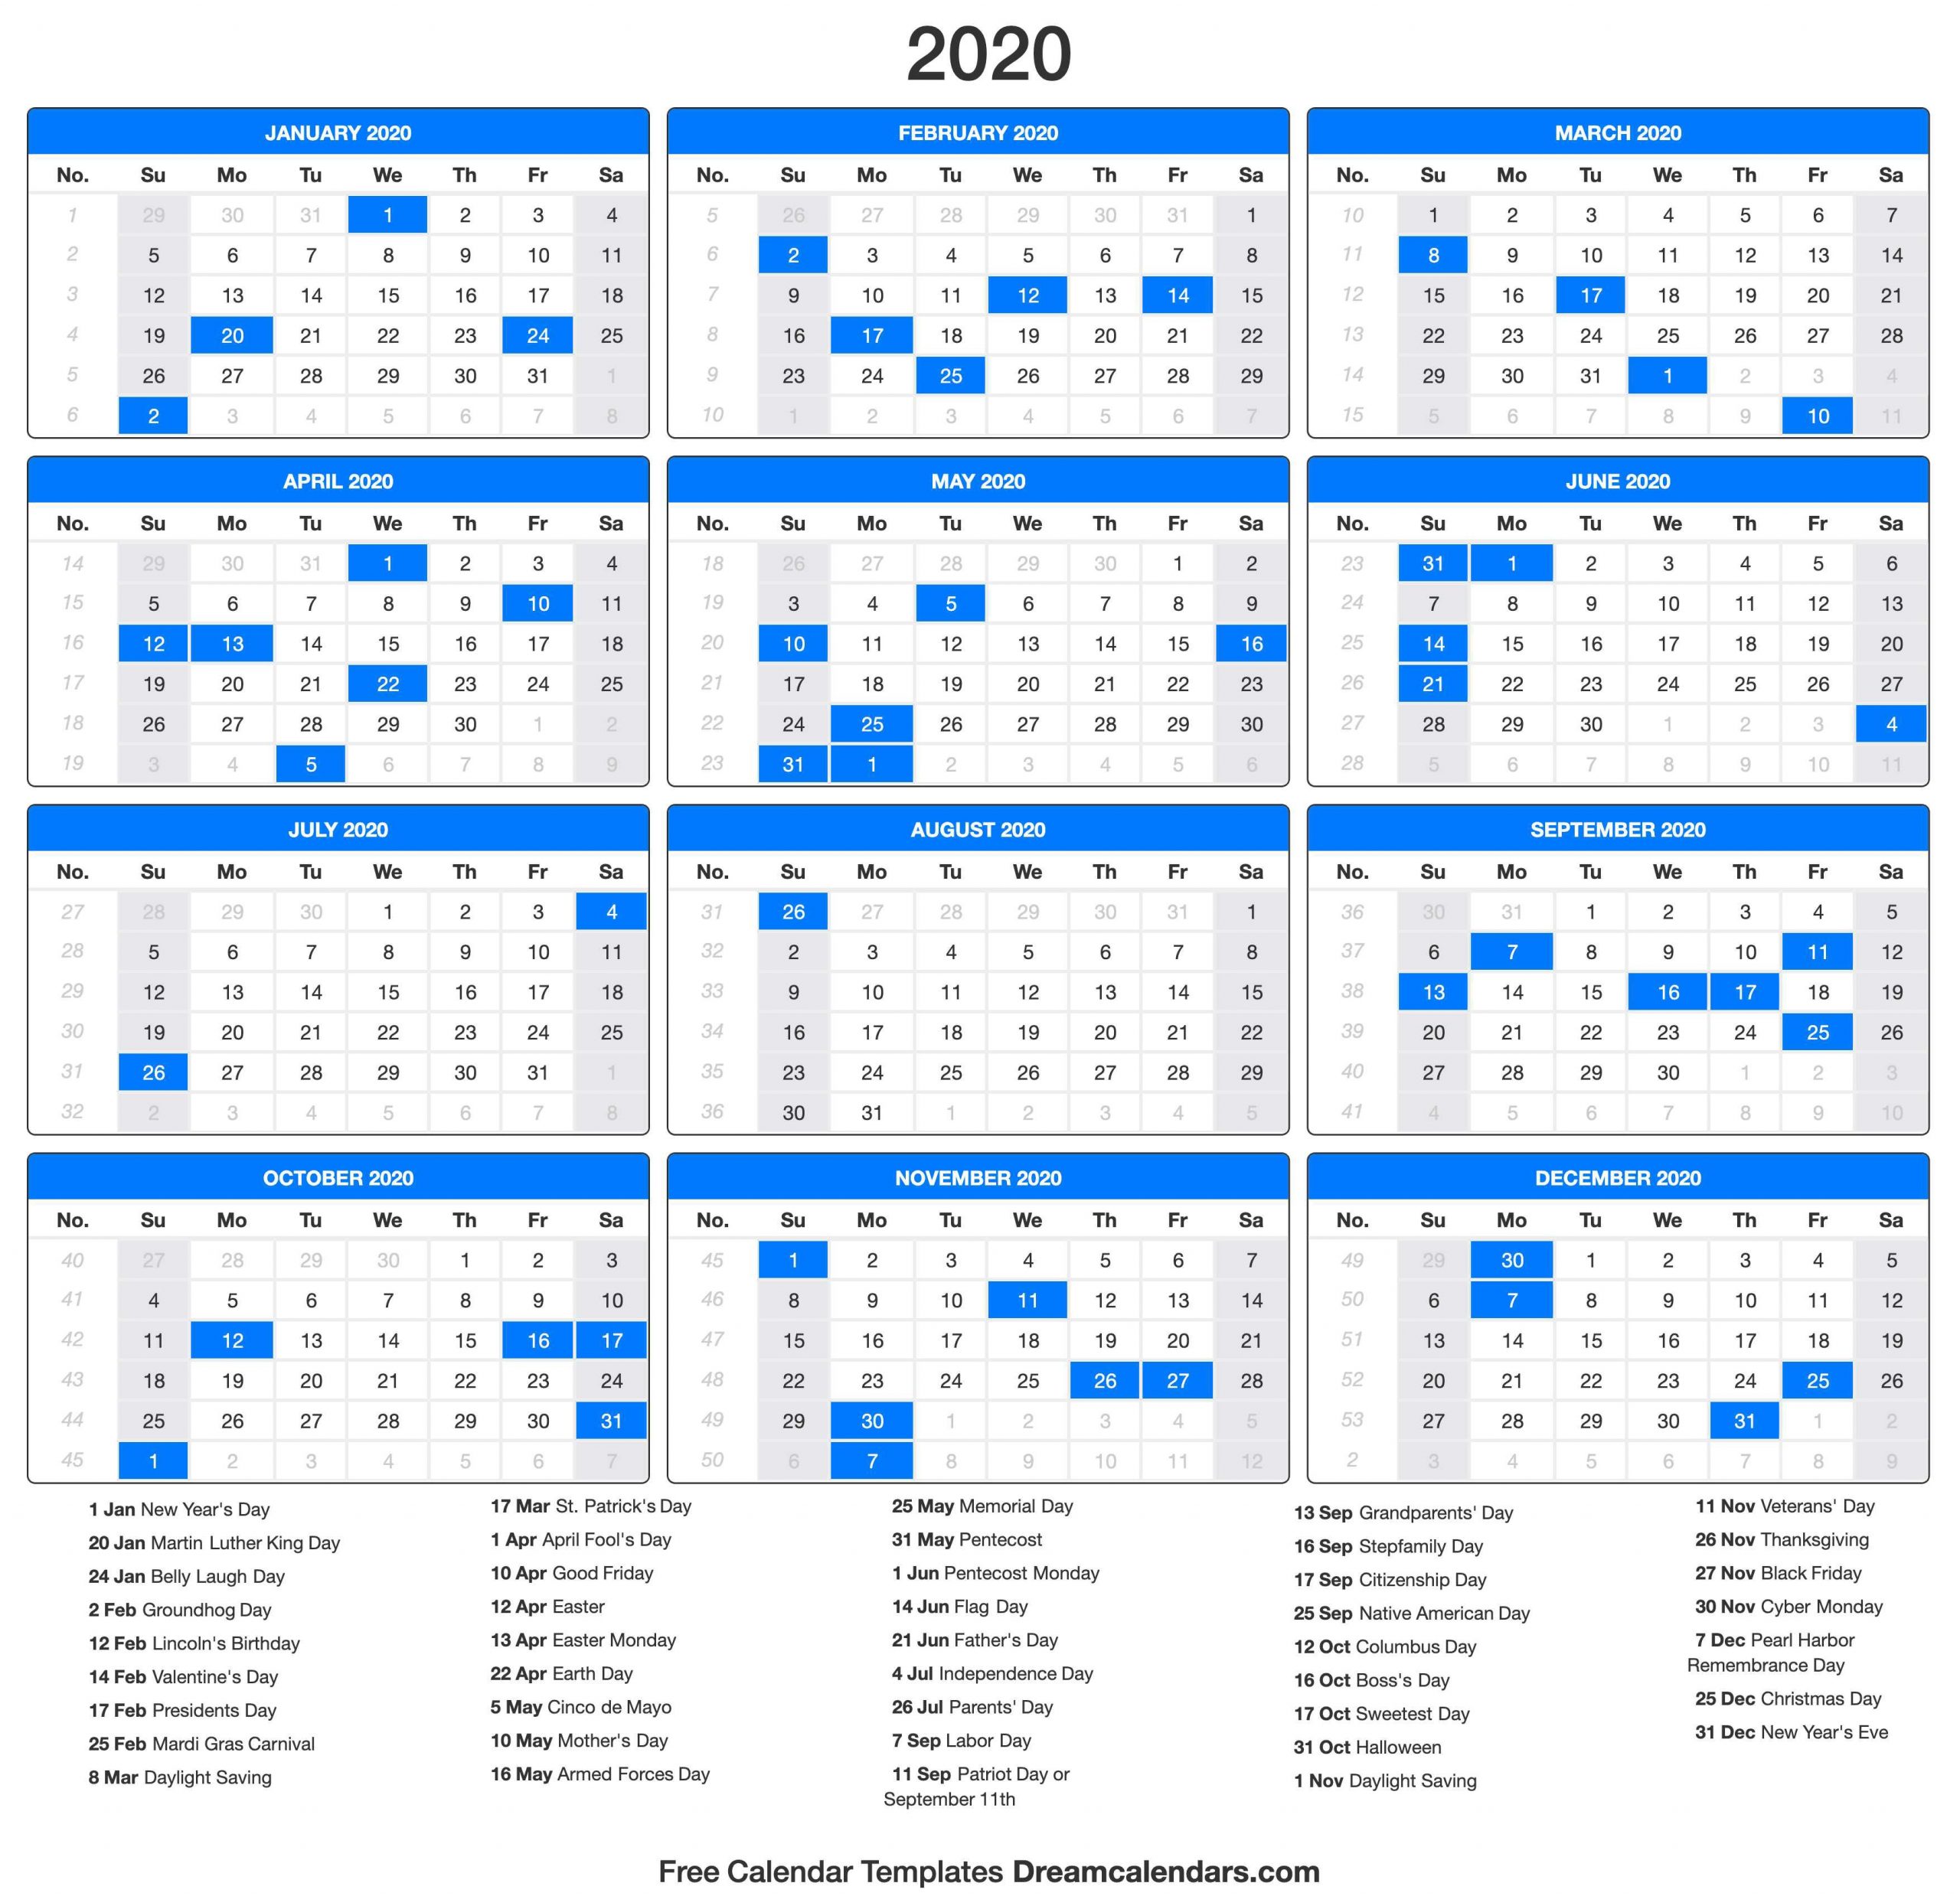 Yearly 2020 Calendar Templates - Helena Orstem - Medium